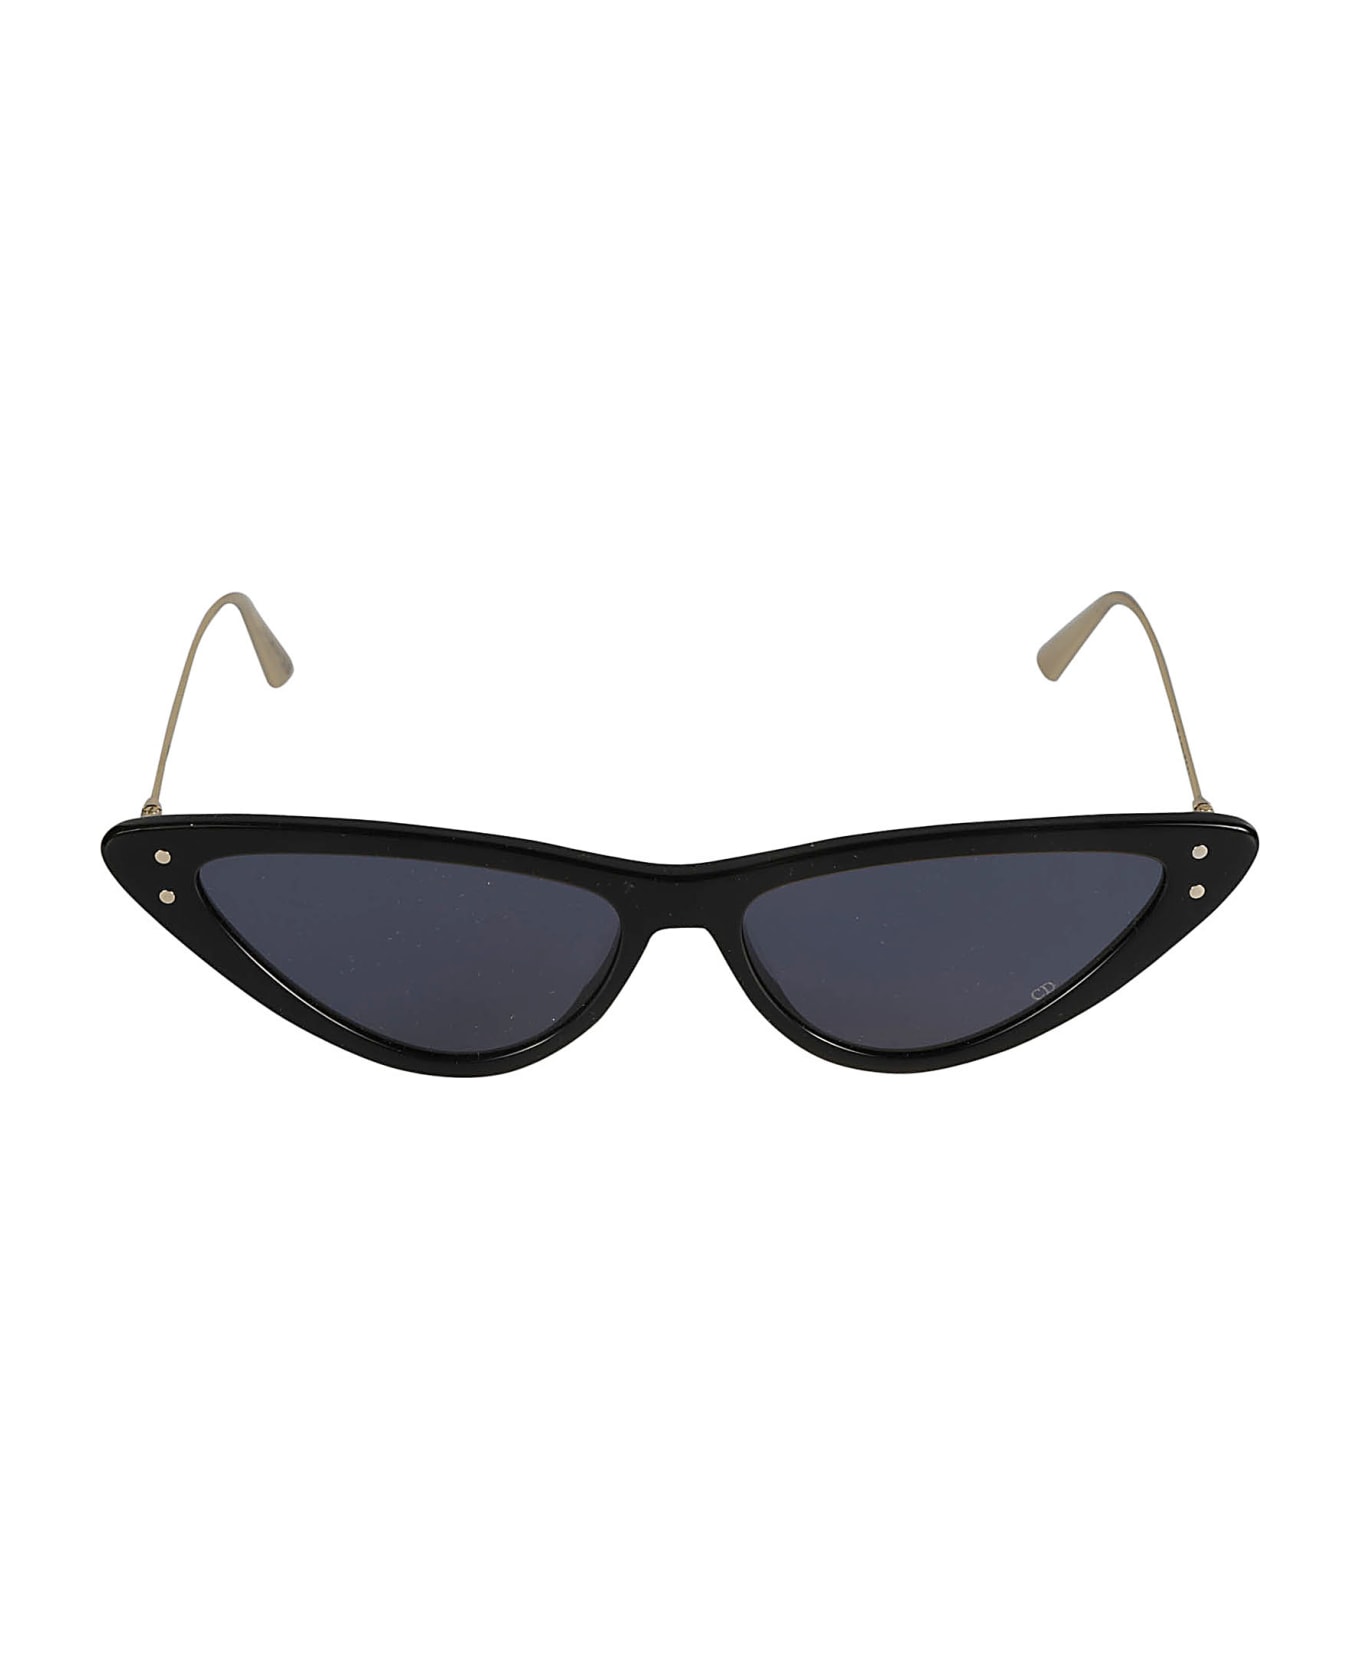 Dior Eyewear Missdior Sunglasses - 12b0